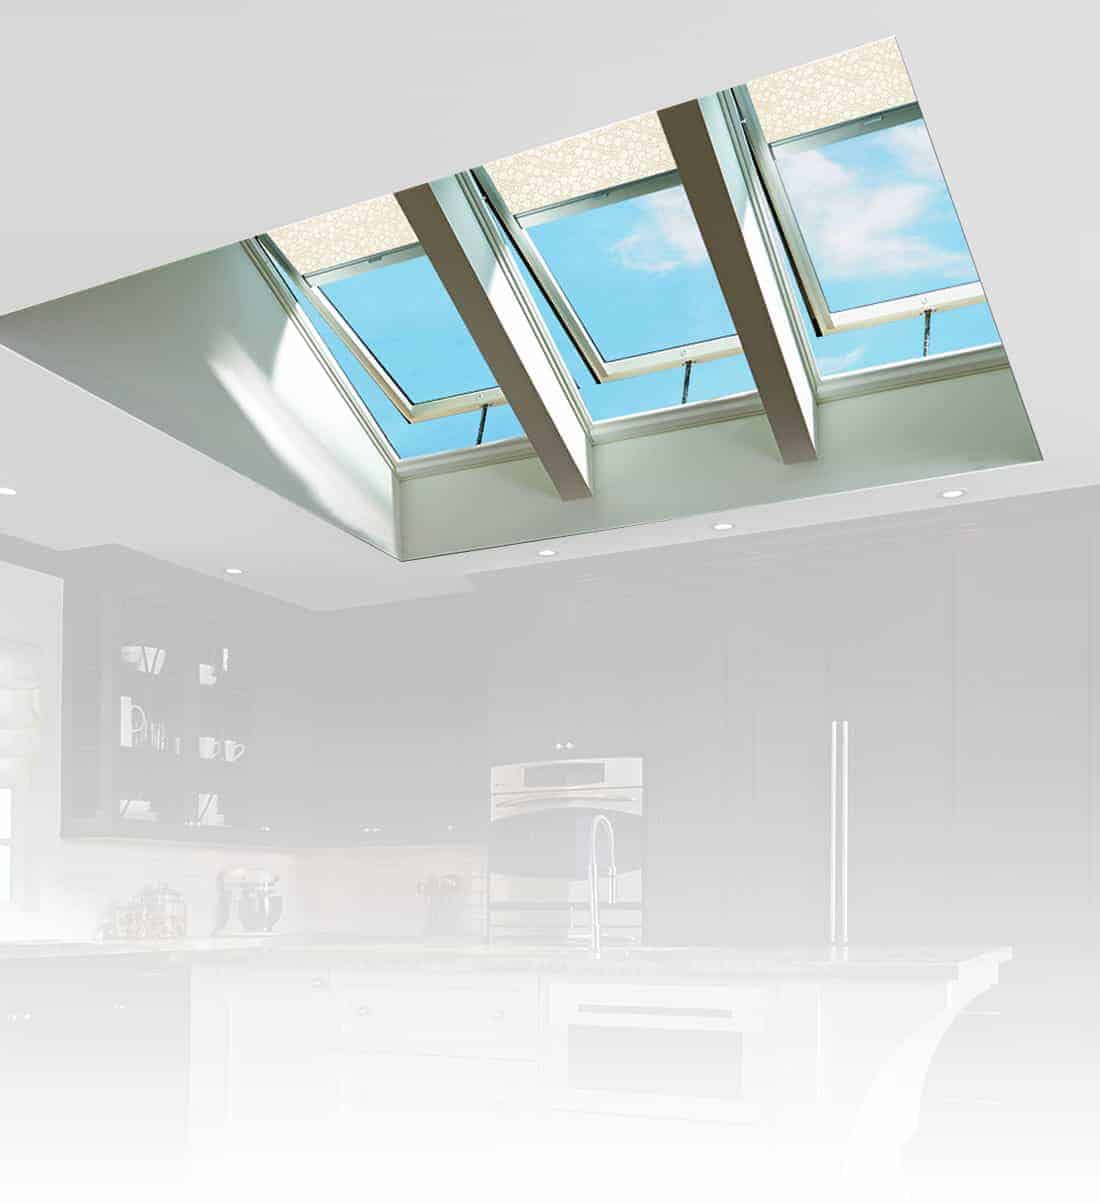 Cool glass skylight